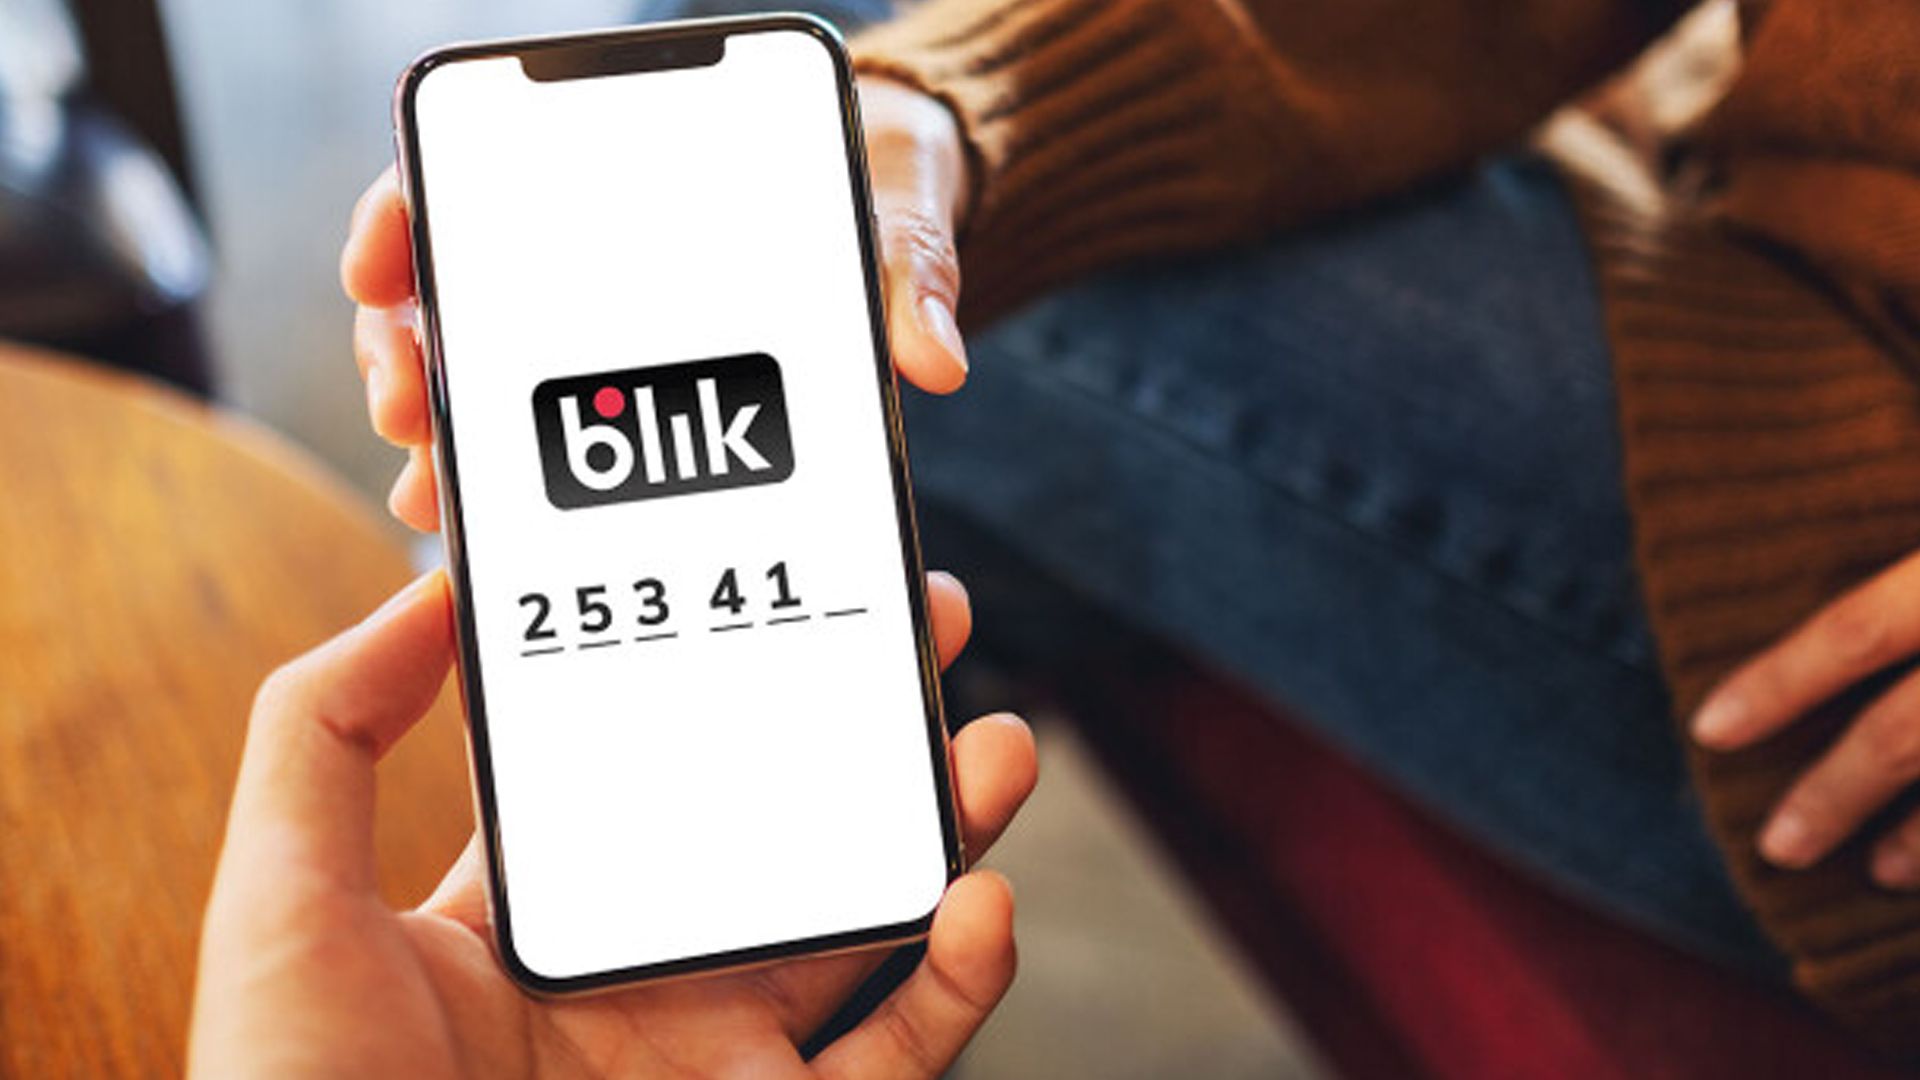 TransferGo объявляет о сотрудничестве с BLIK